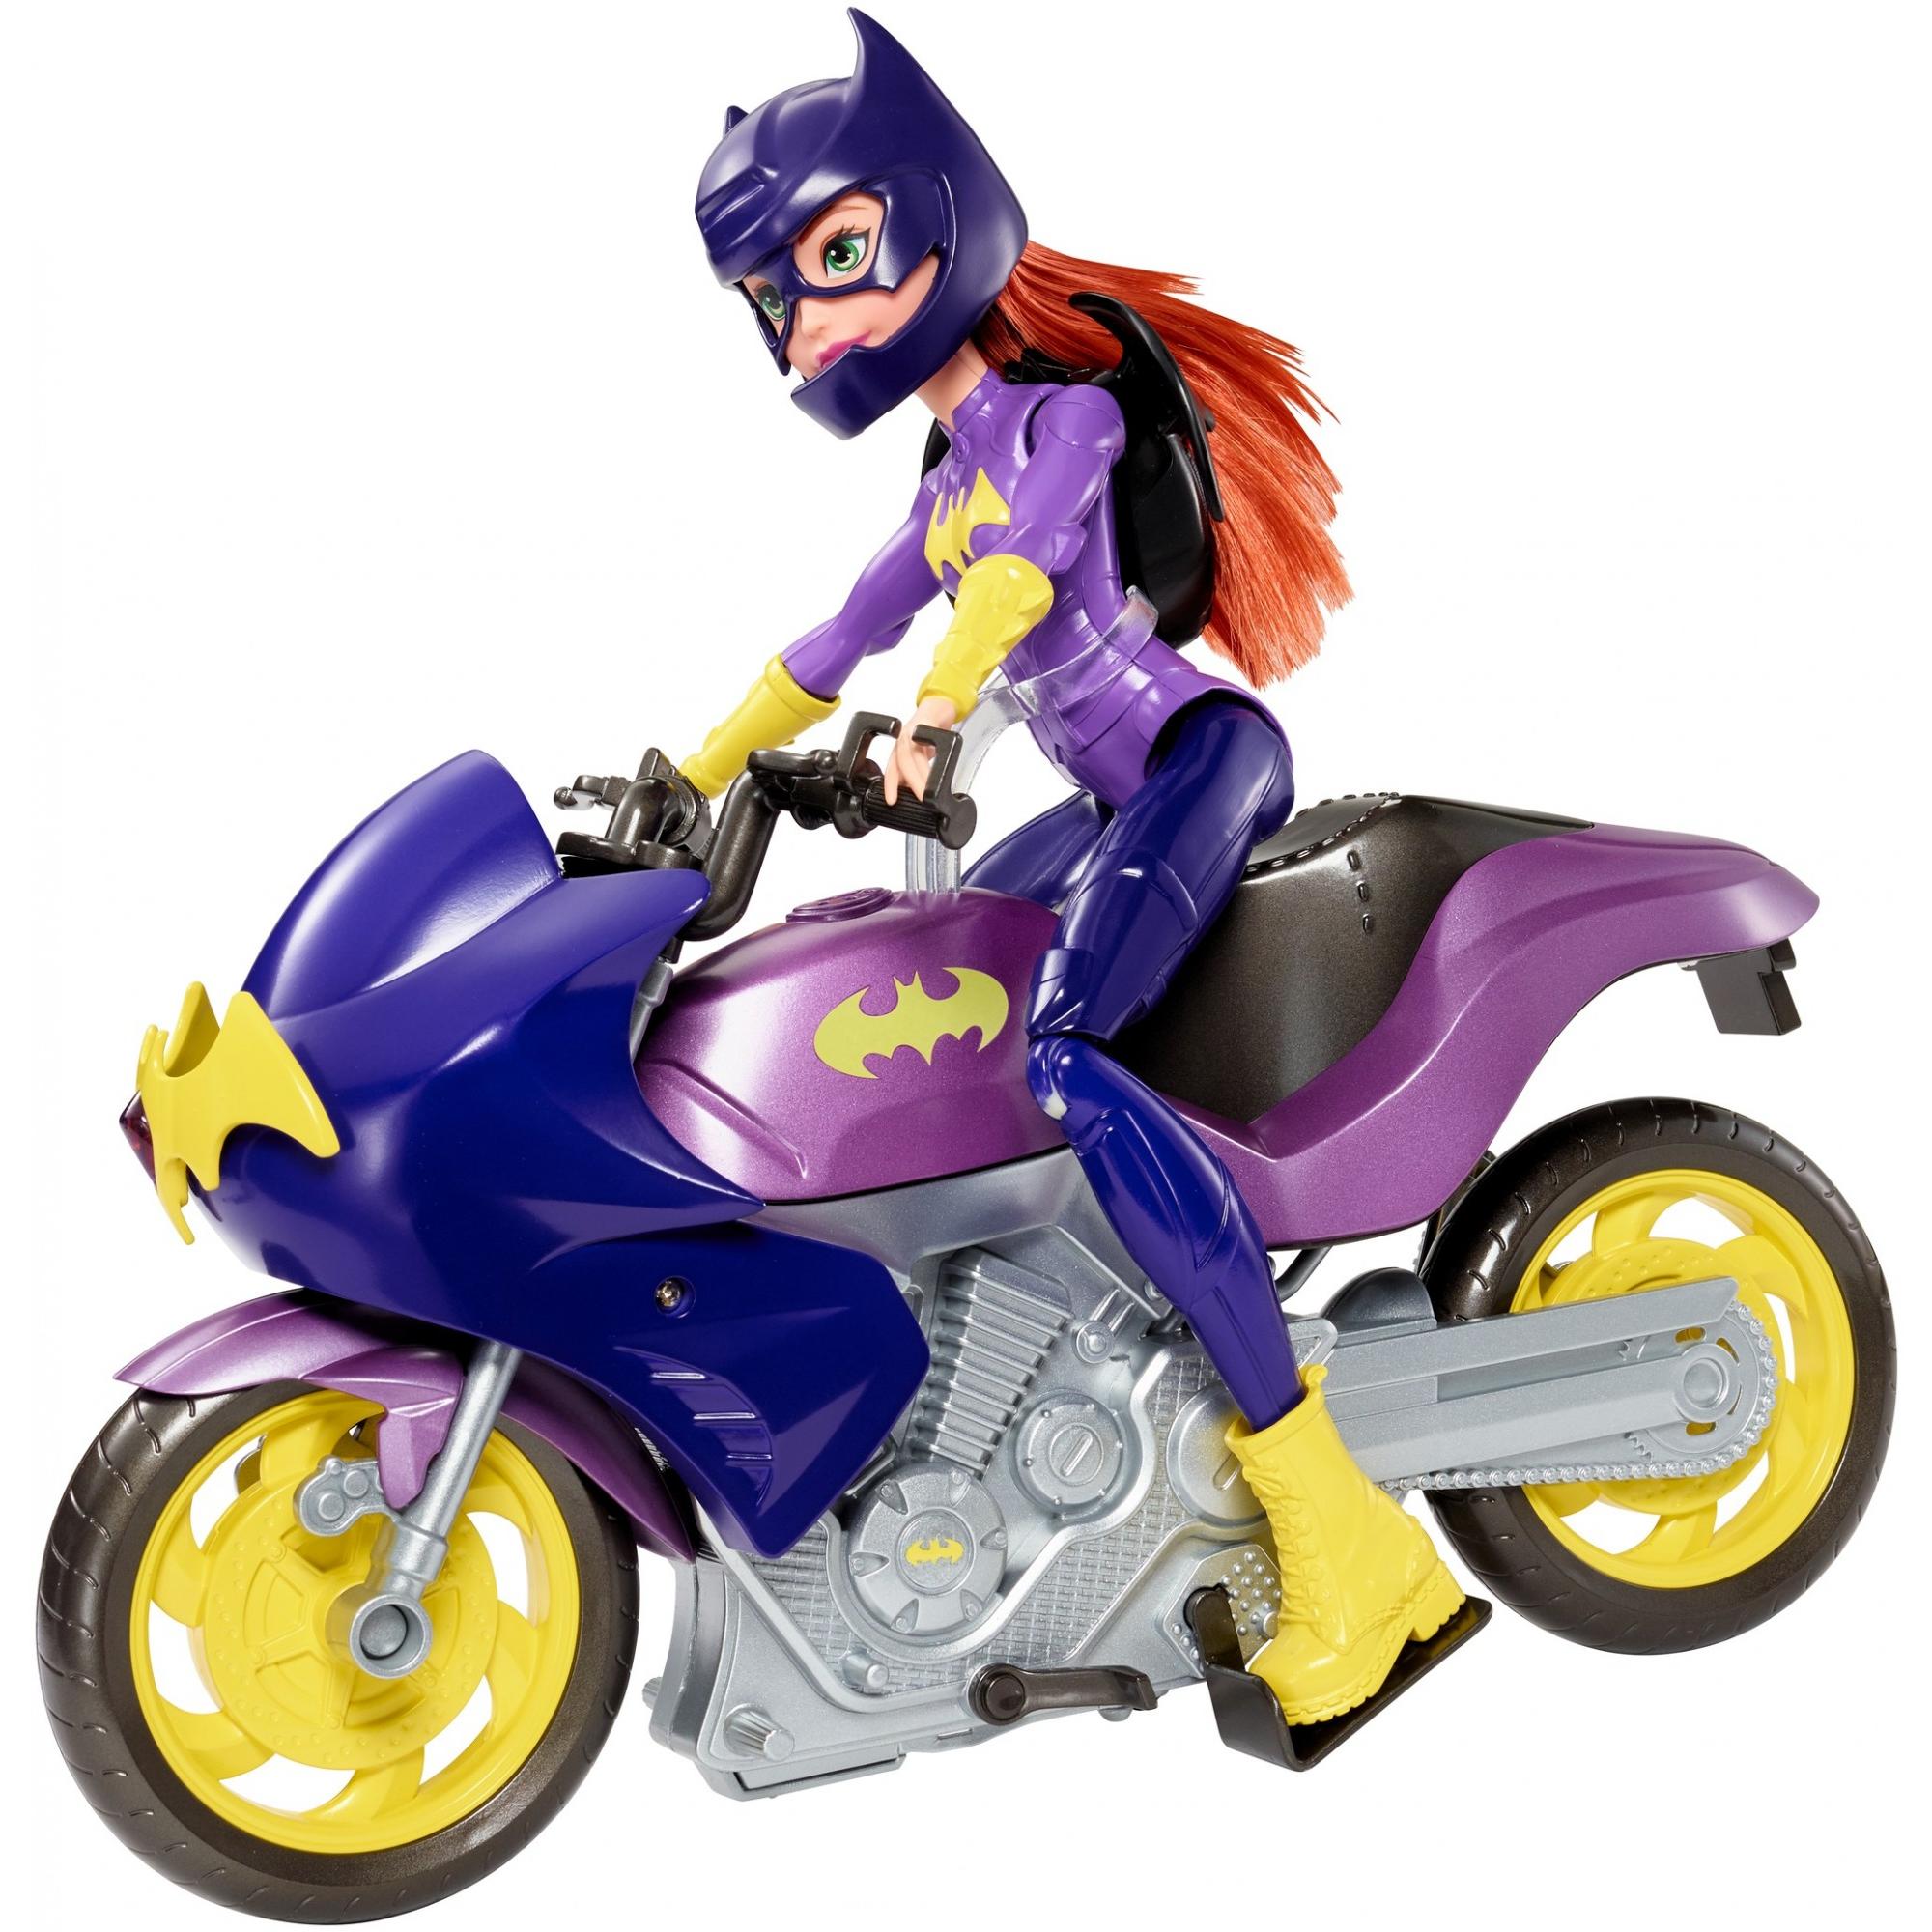 DC Super Hero Girls Batgirl Doll and Batcycle Vehicle Set - image 4 of 12